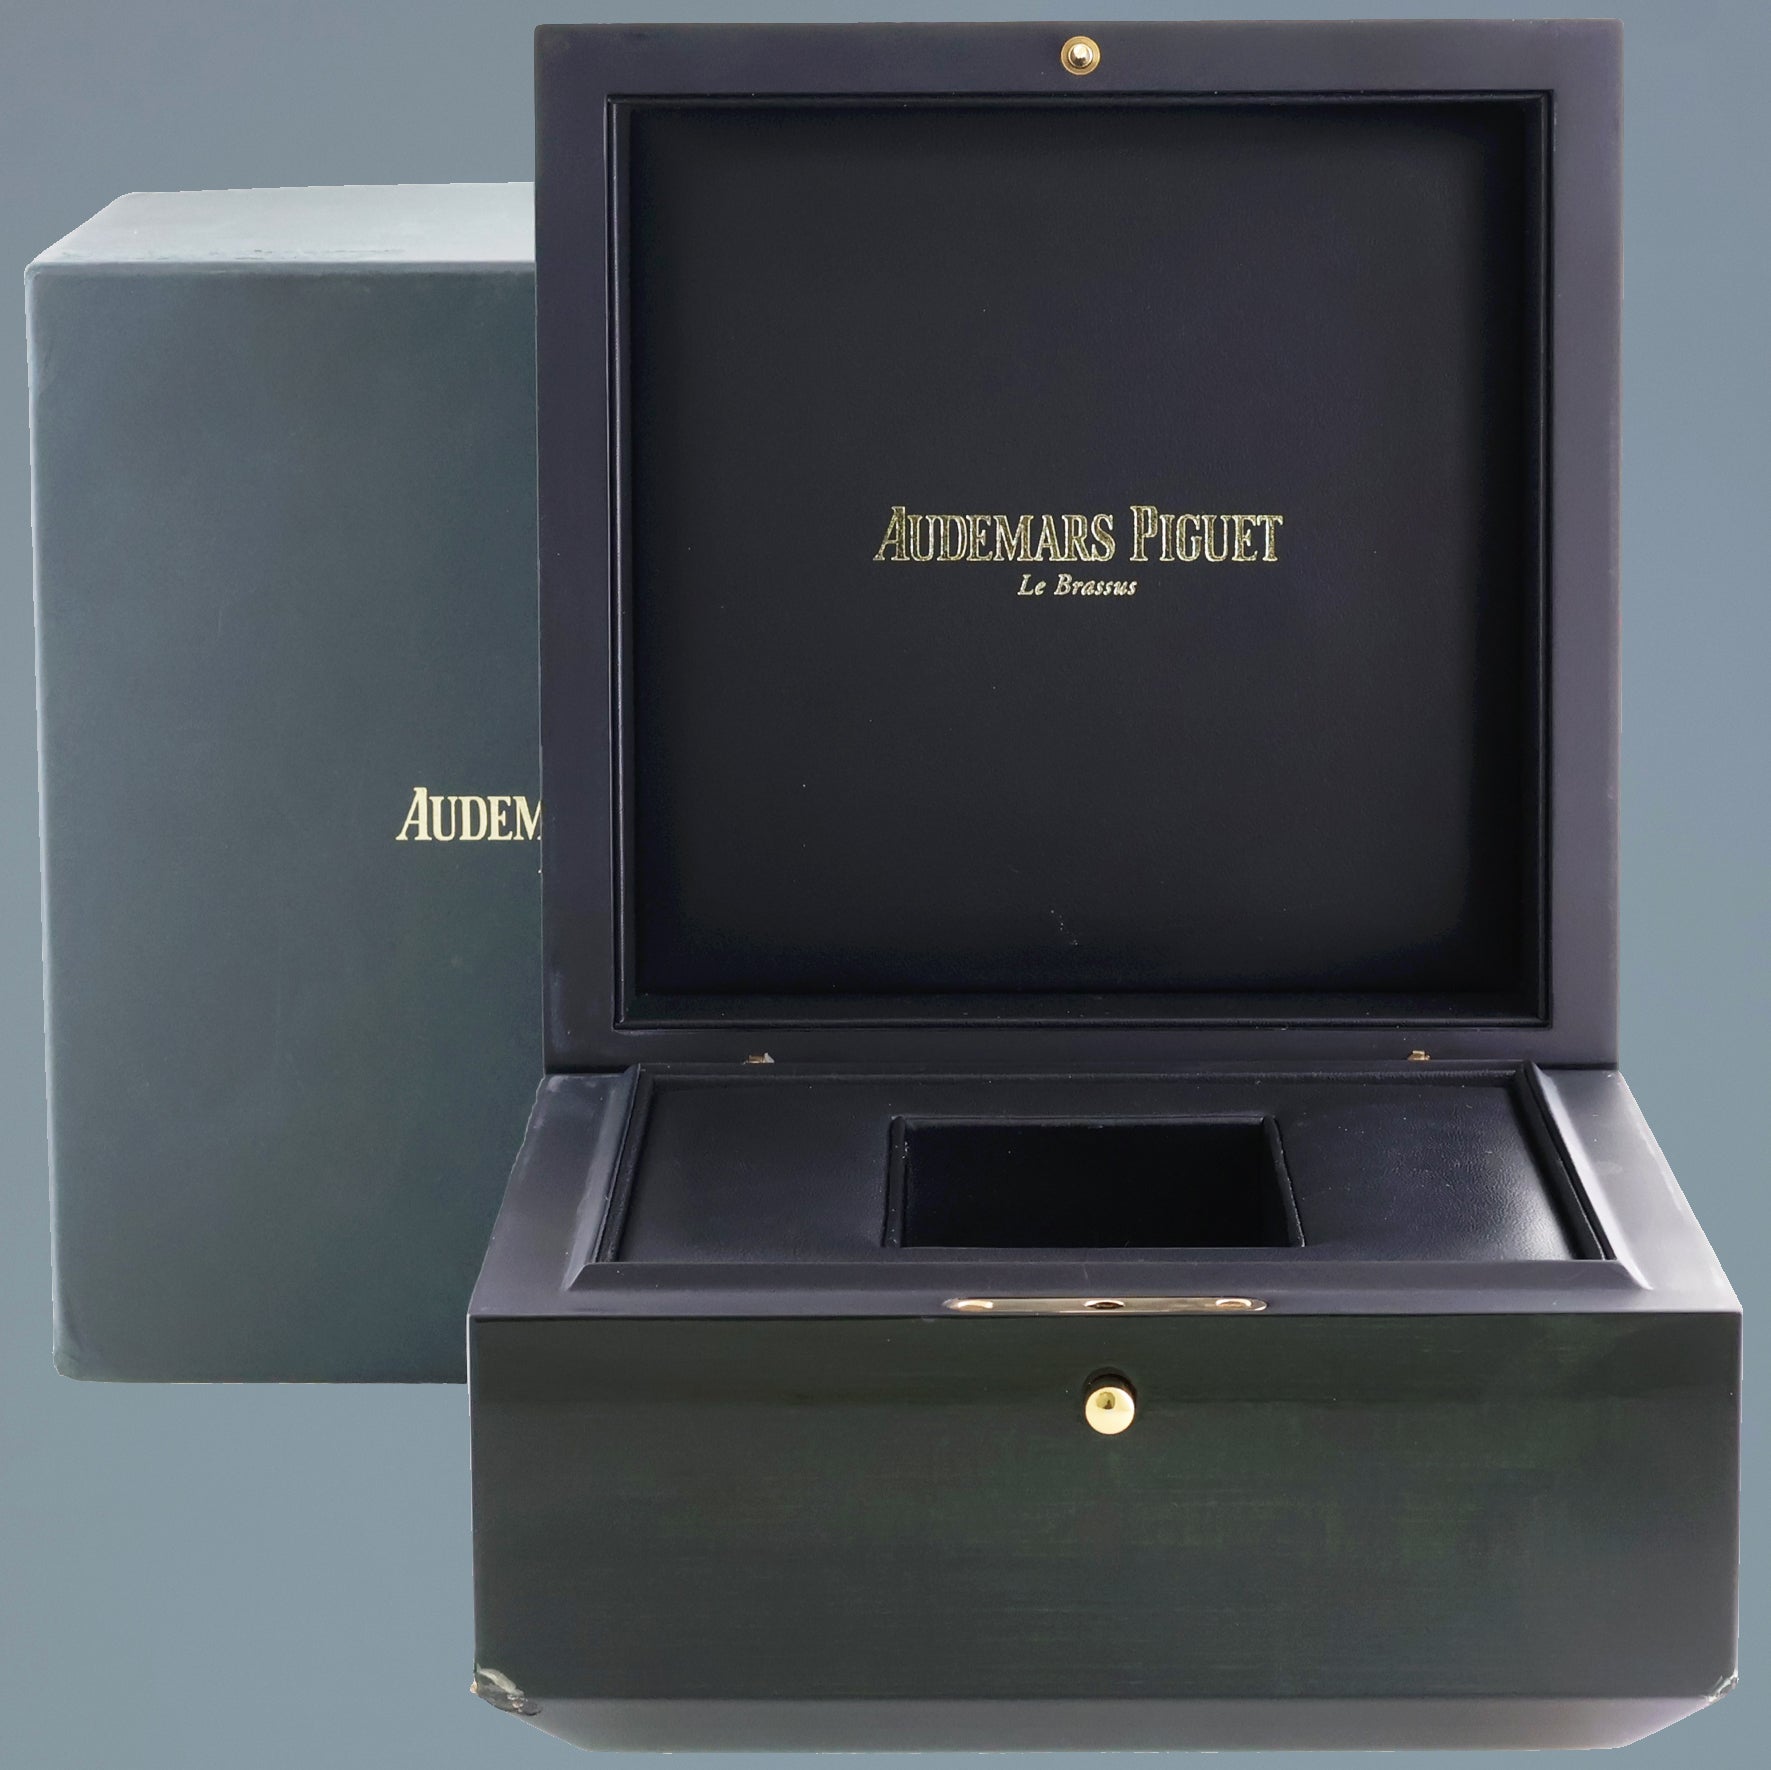 Audemars Piguet Royal Oak Offshore Ceramic Steel Panda 26405 44mm Chrono Watch